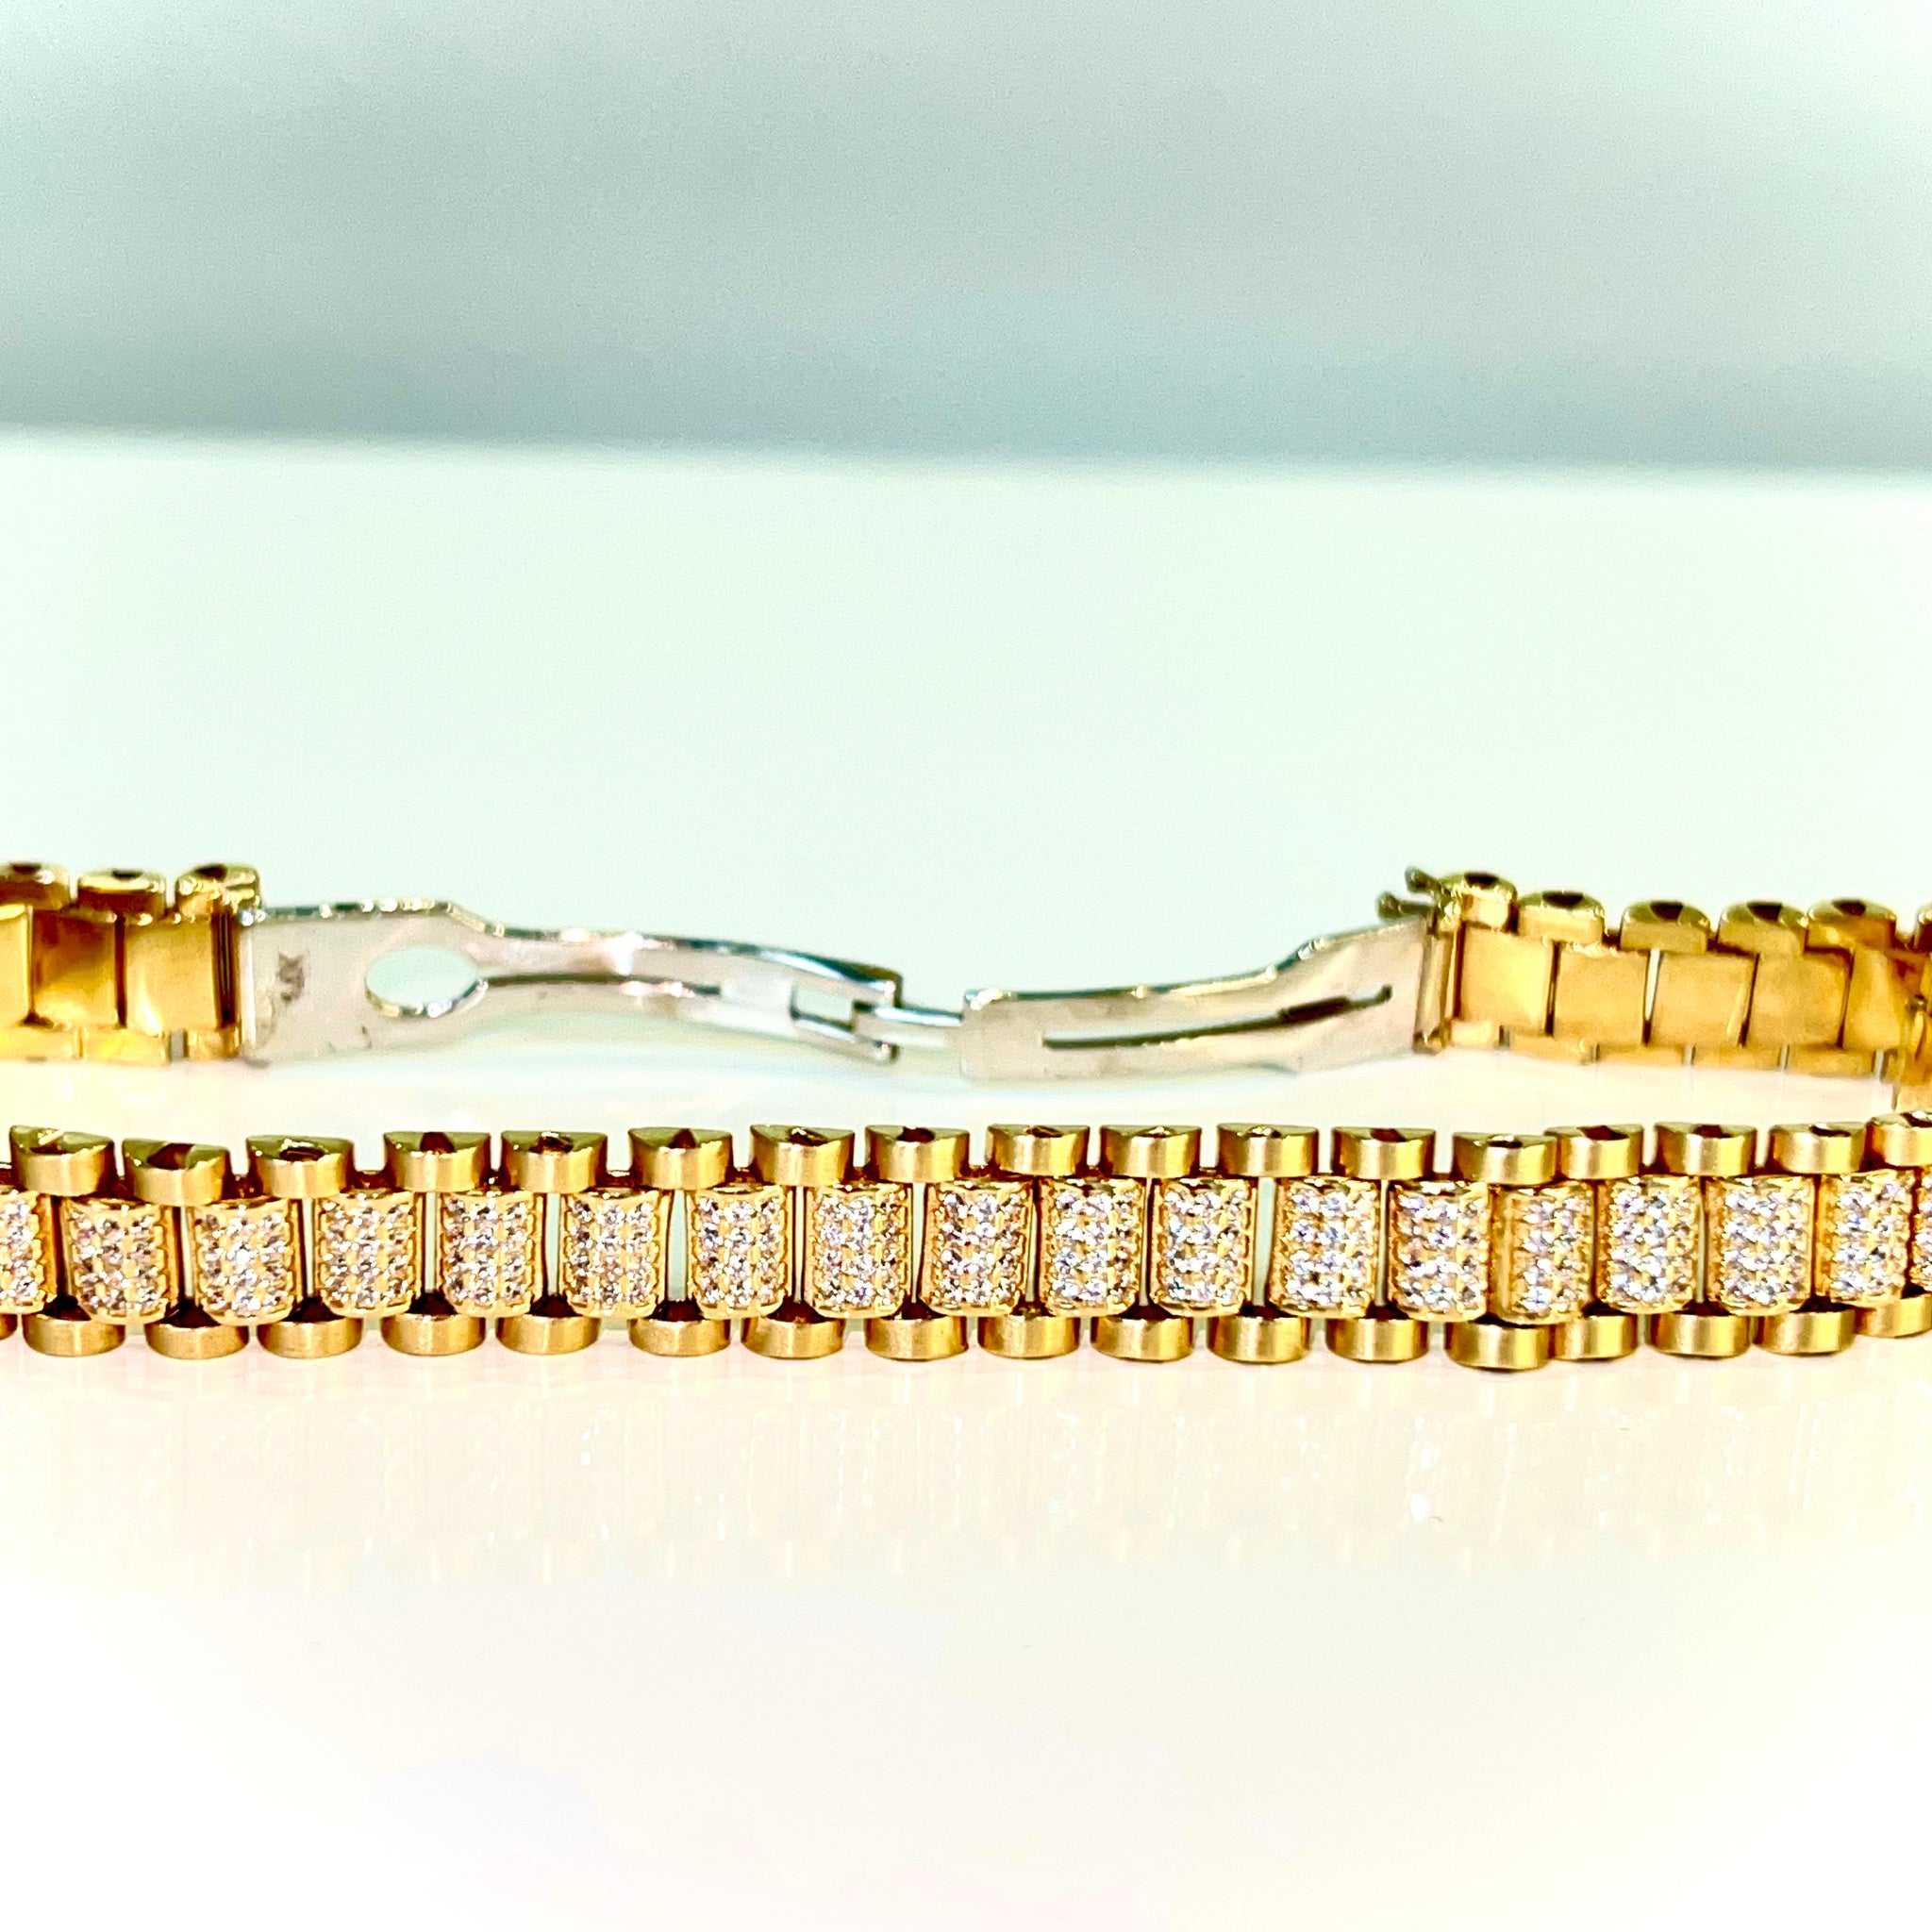 Bicolor Presidential Bracelet - 14 carat gold - 10mm